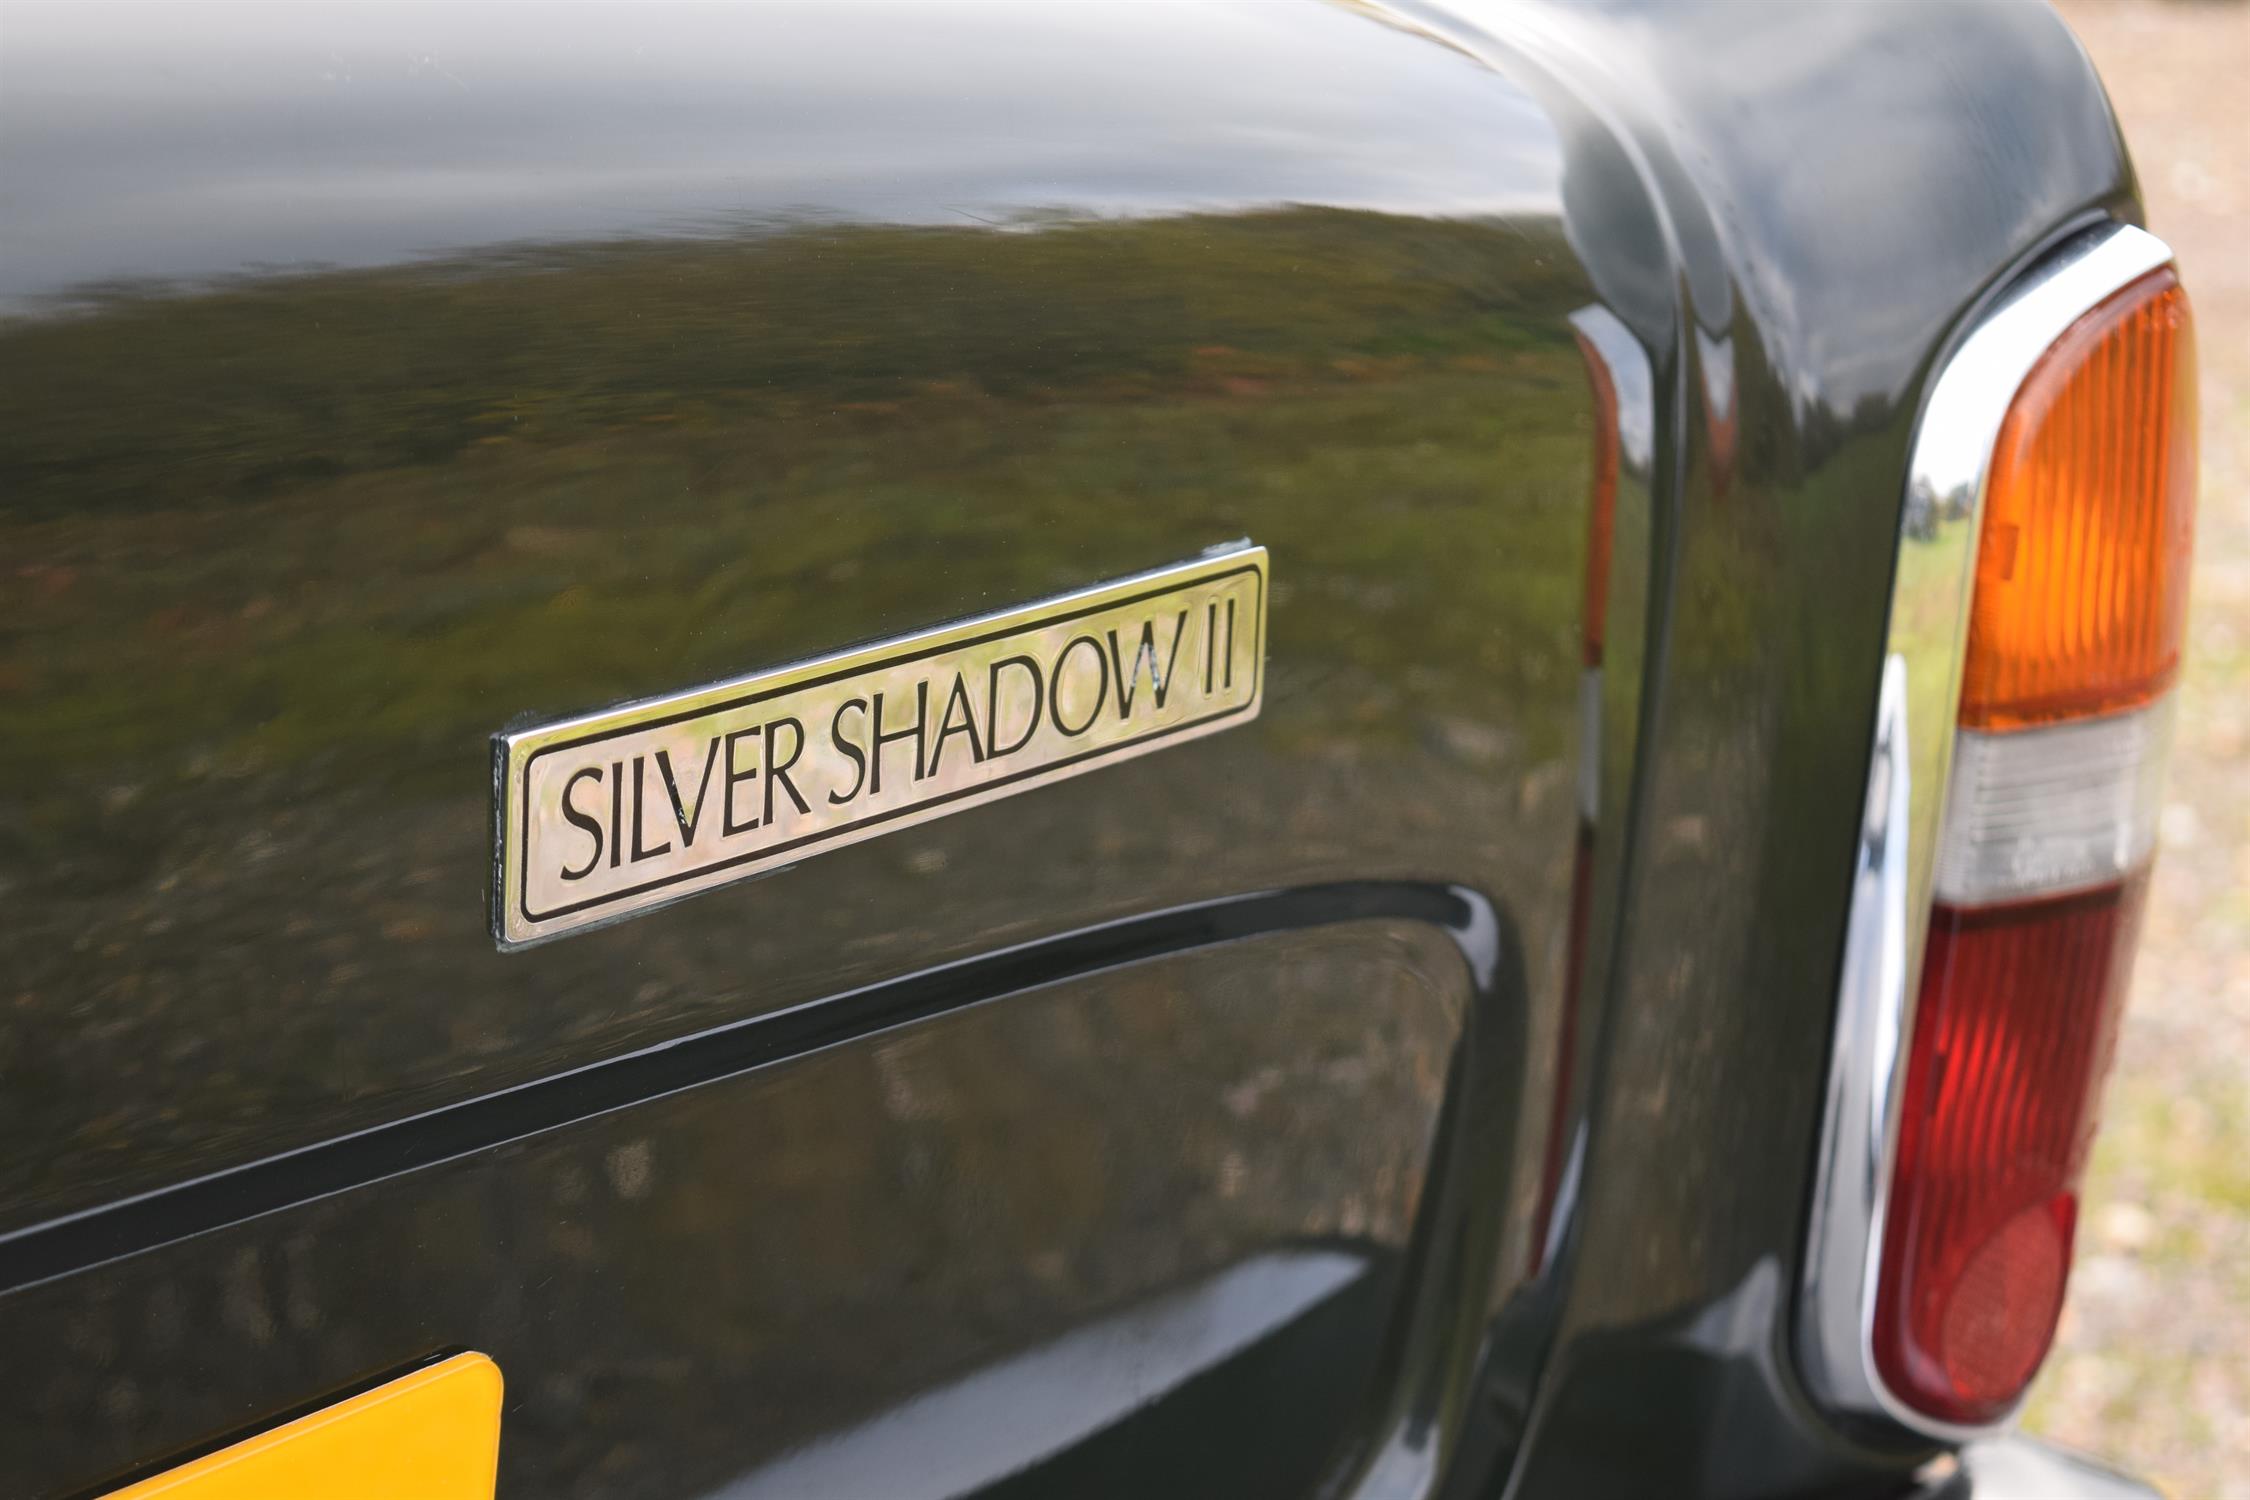 1979 Rolls-Royce Silver Shadow II - Image 19 of 20